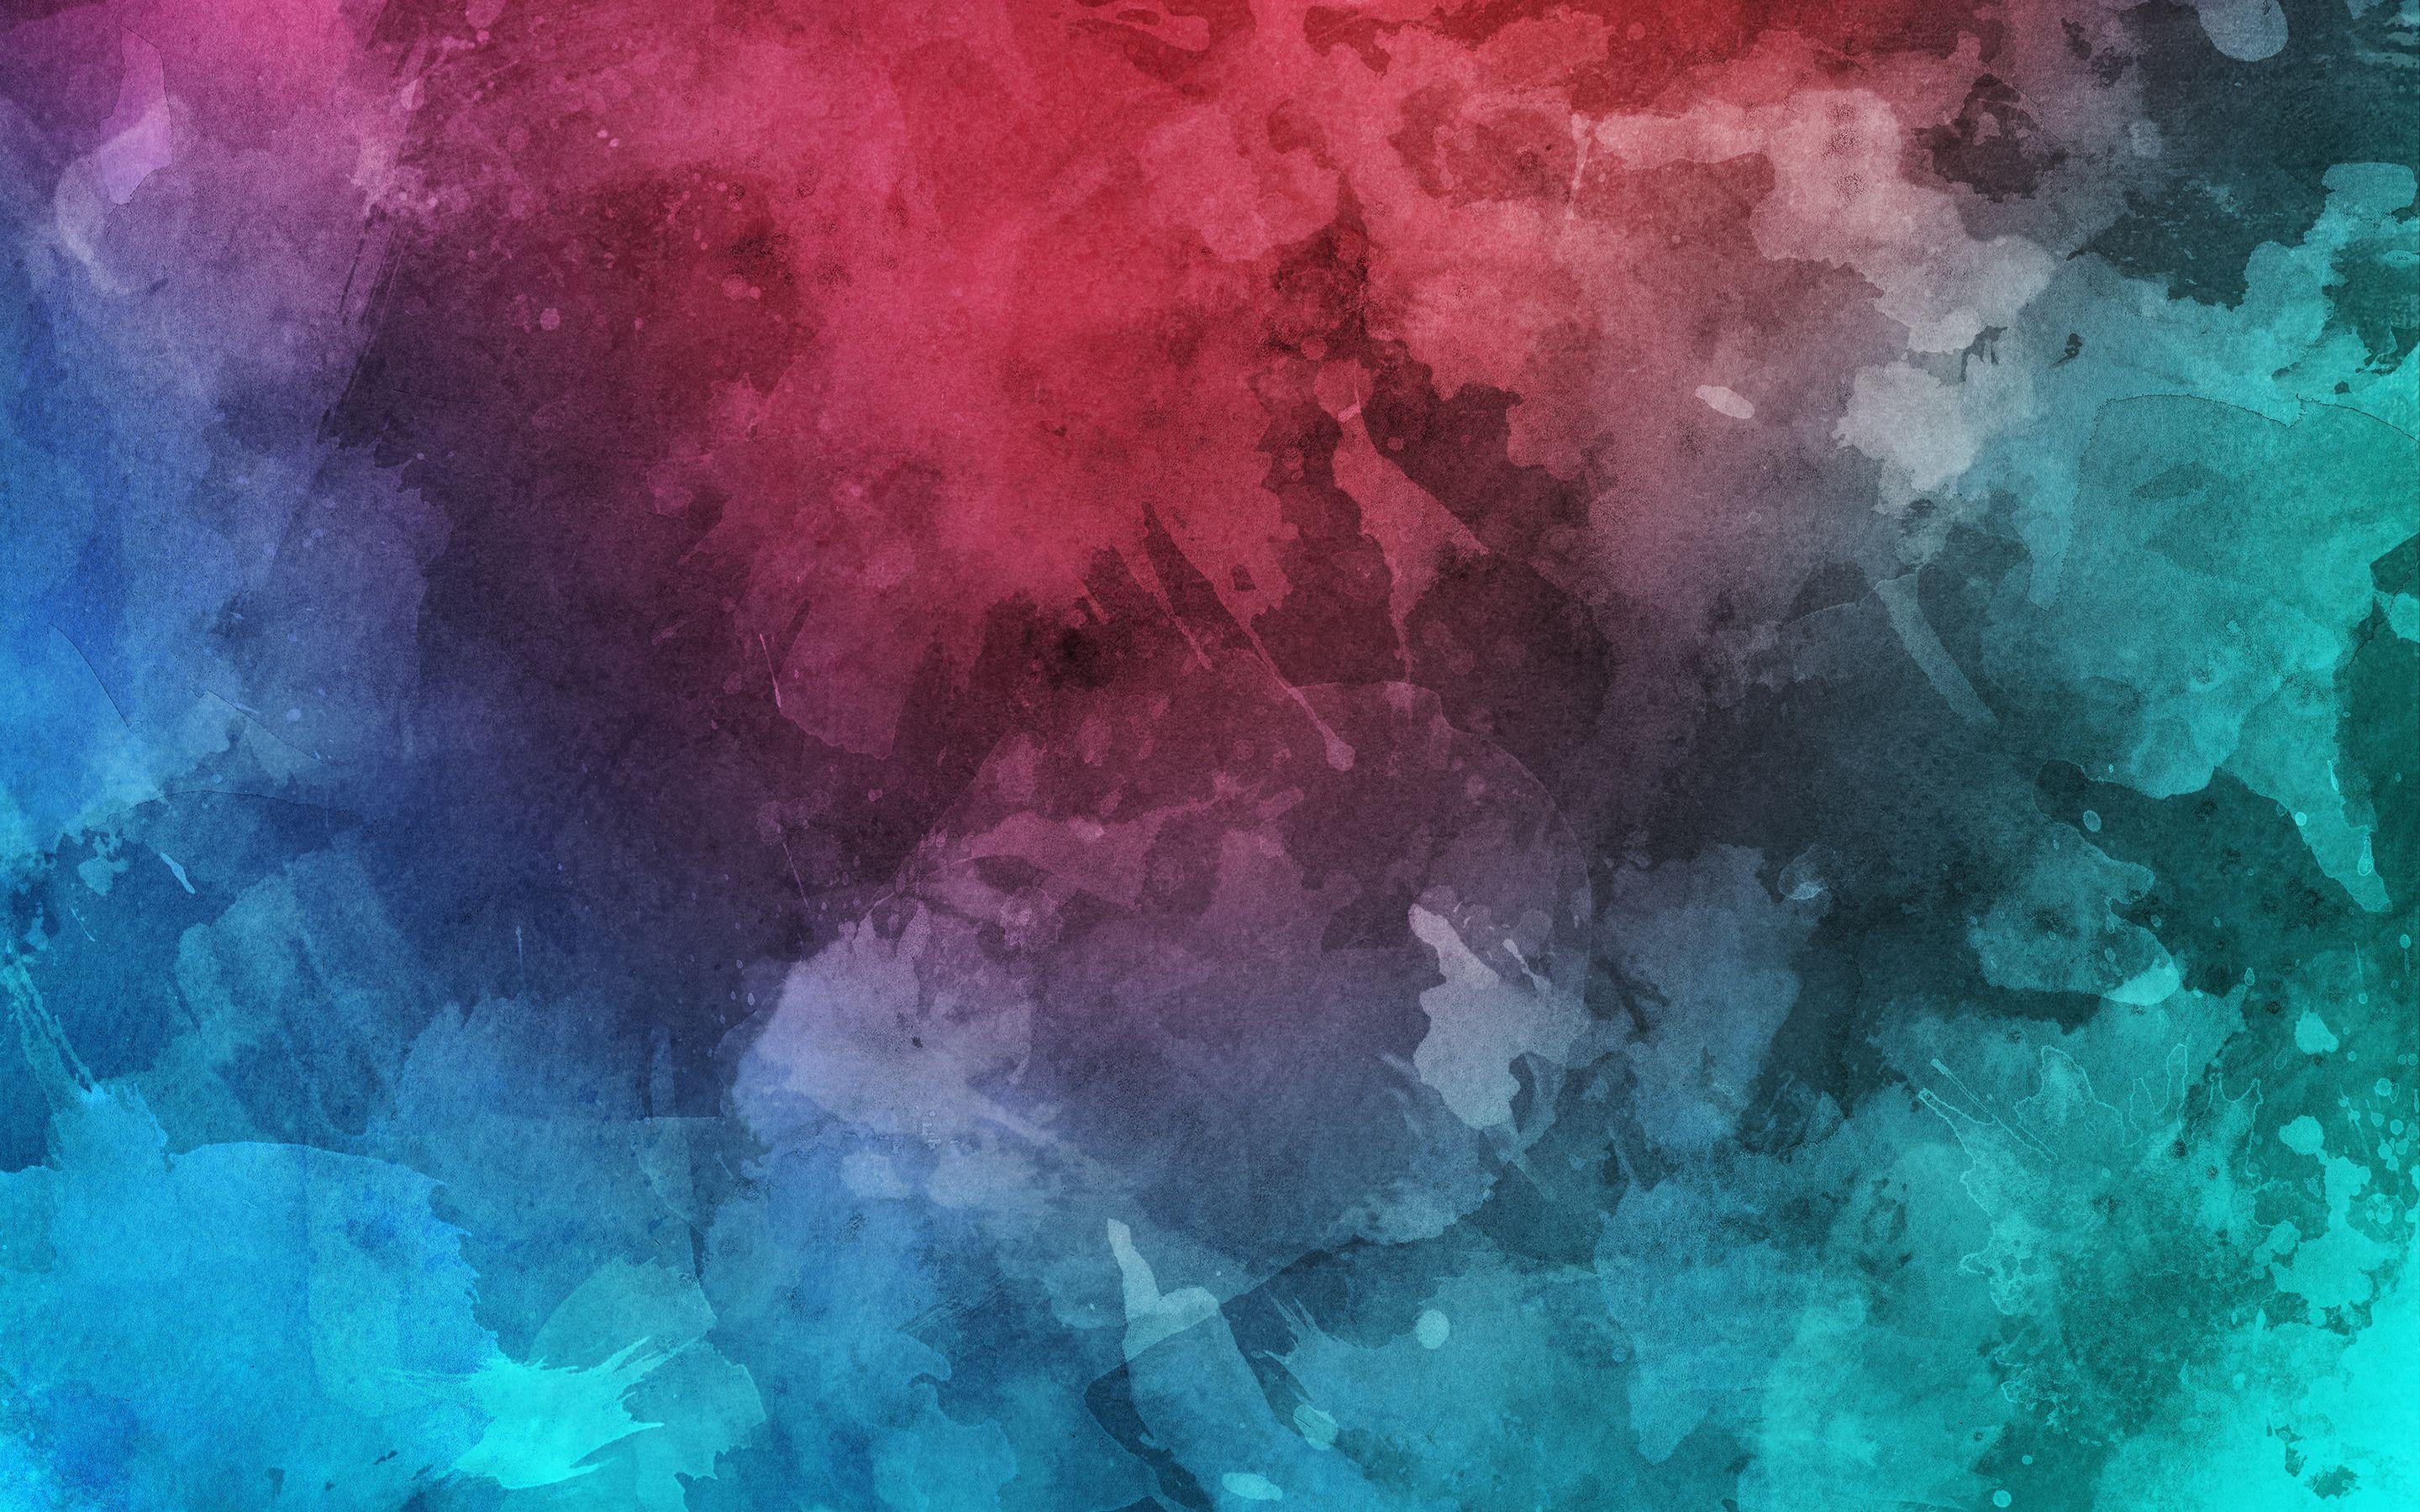 Hd Wallpapers 1080p Colors Wallpaper Cave